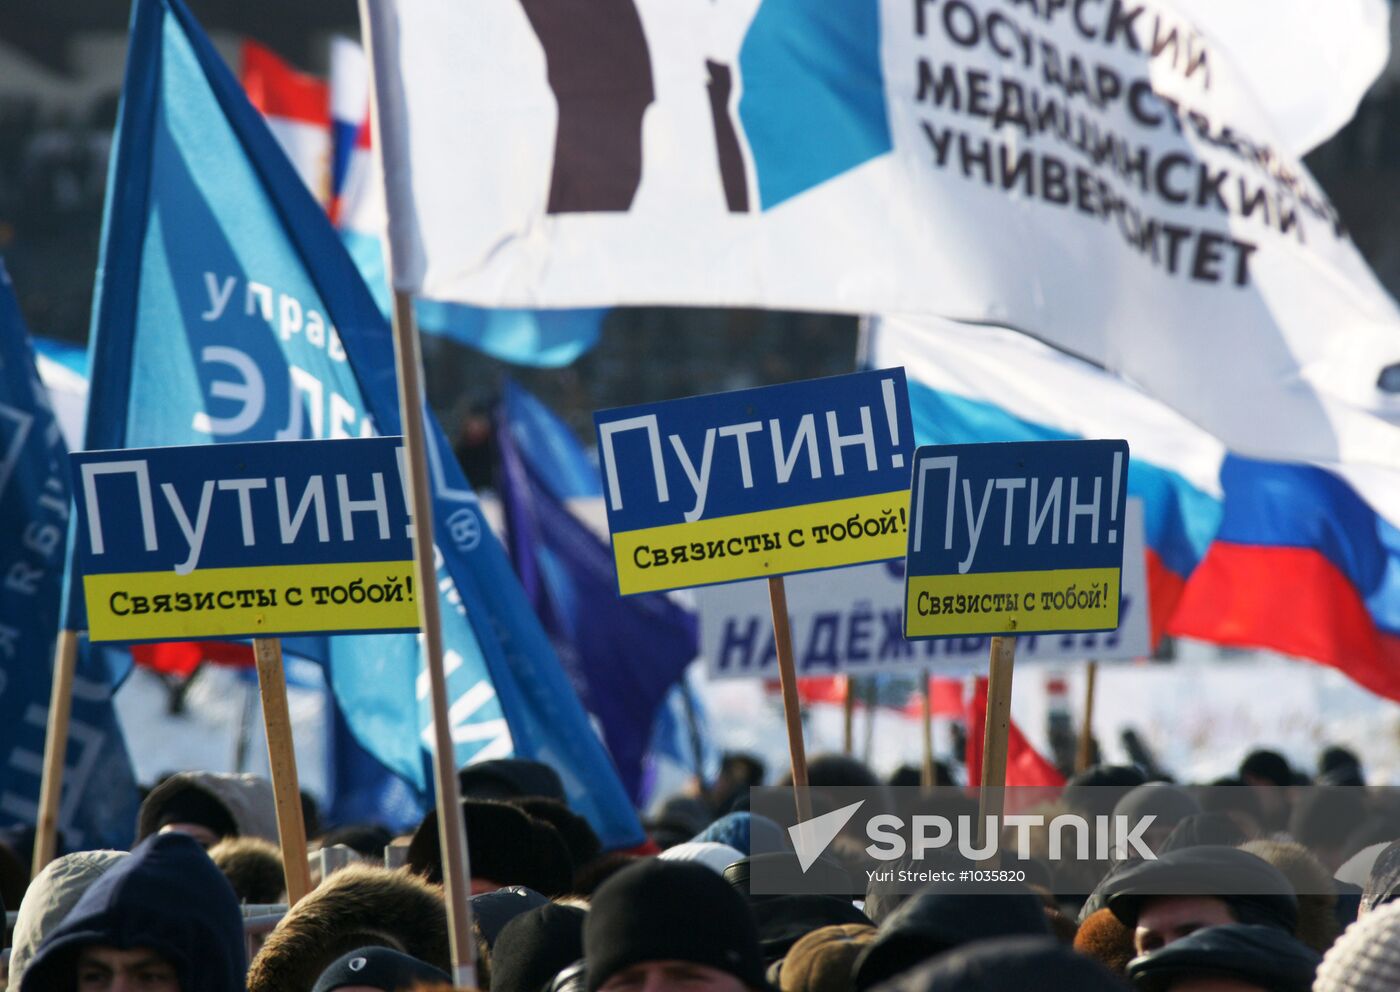 Rally in support of Vladimir Putin in Samara